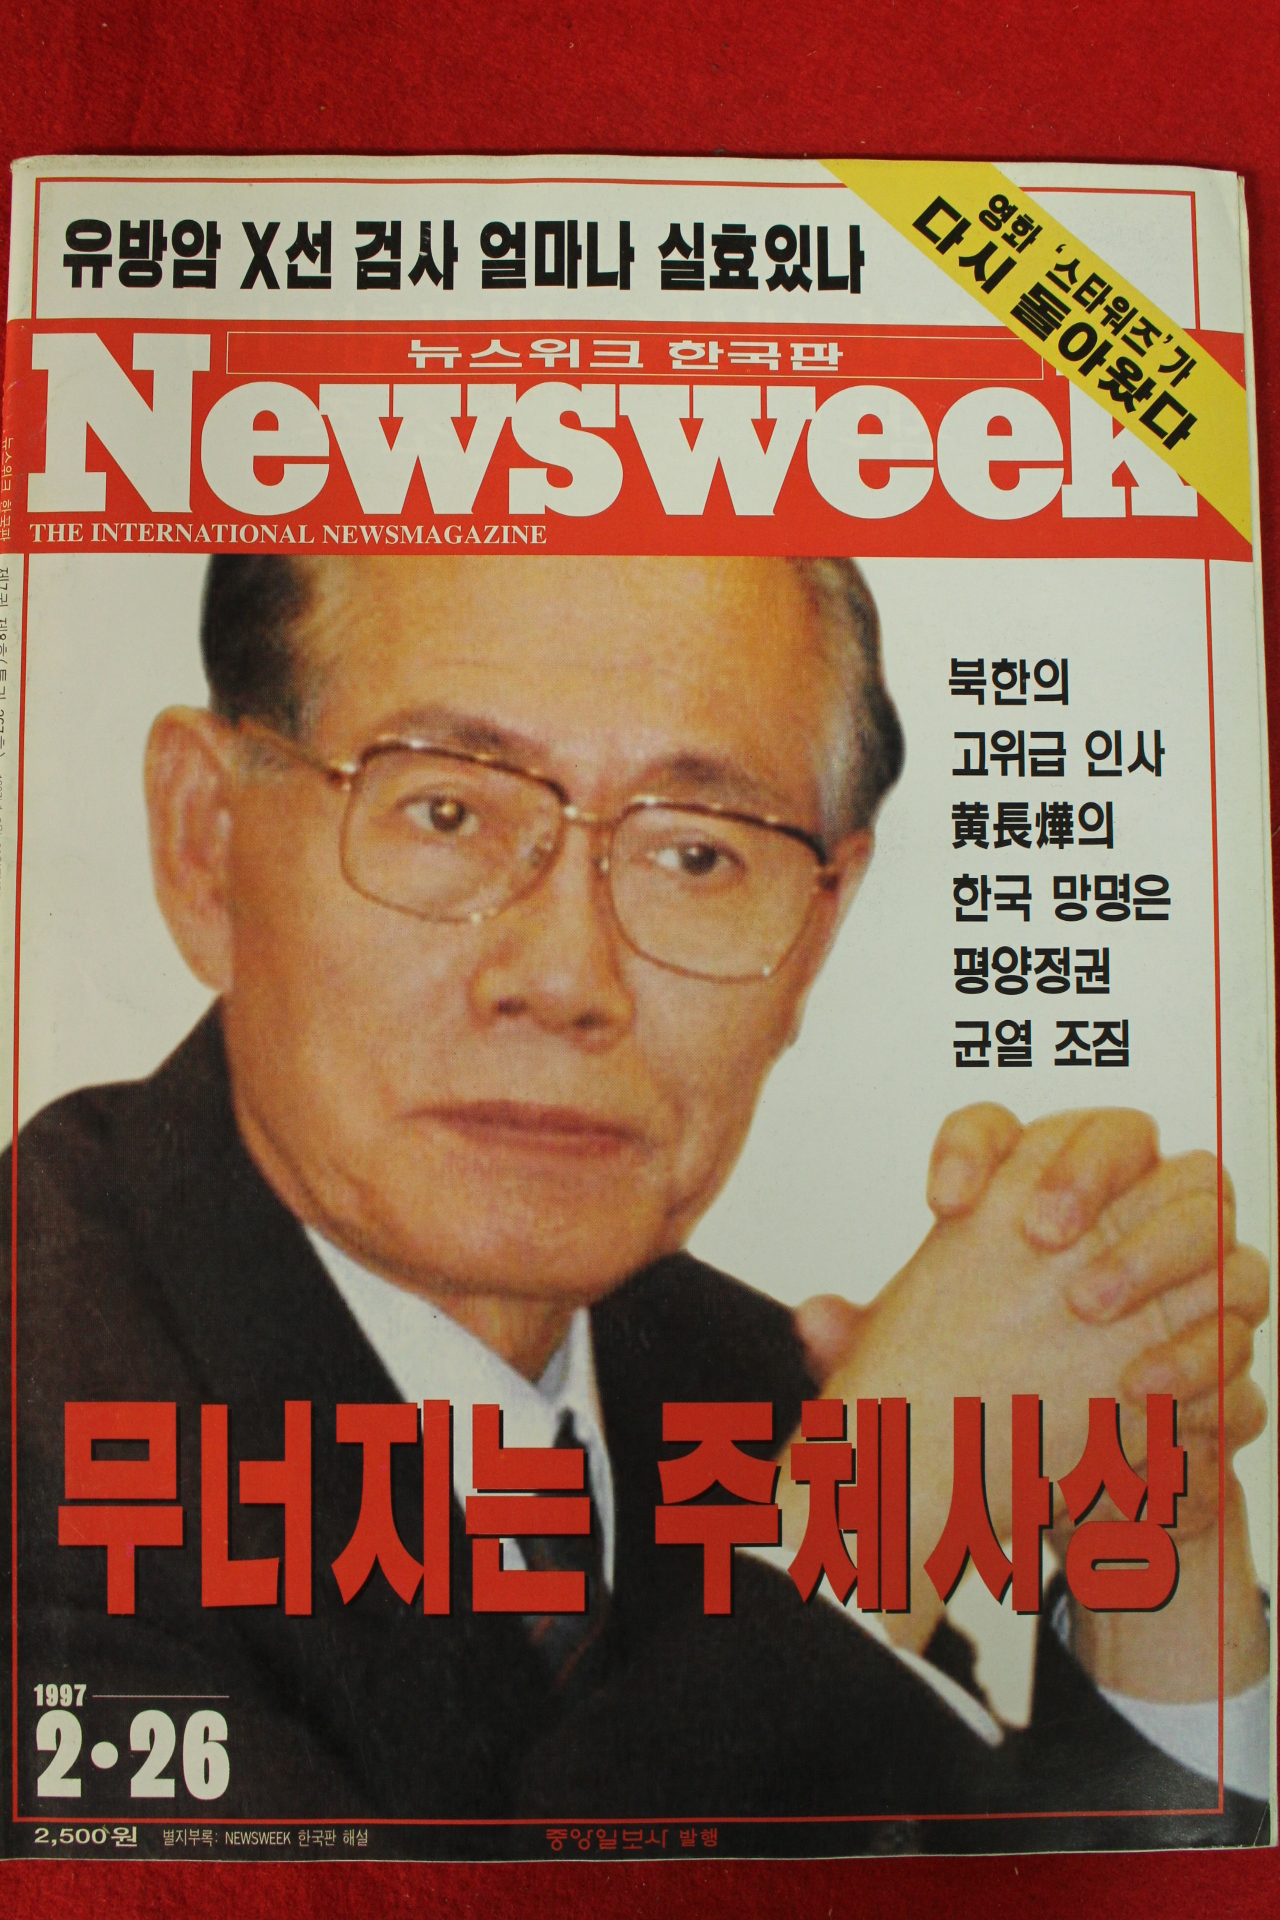 1997년 뉴스위크 2월26일자